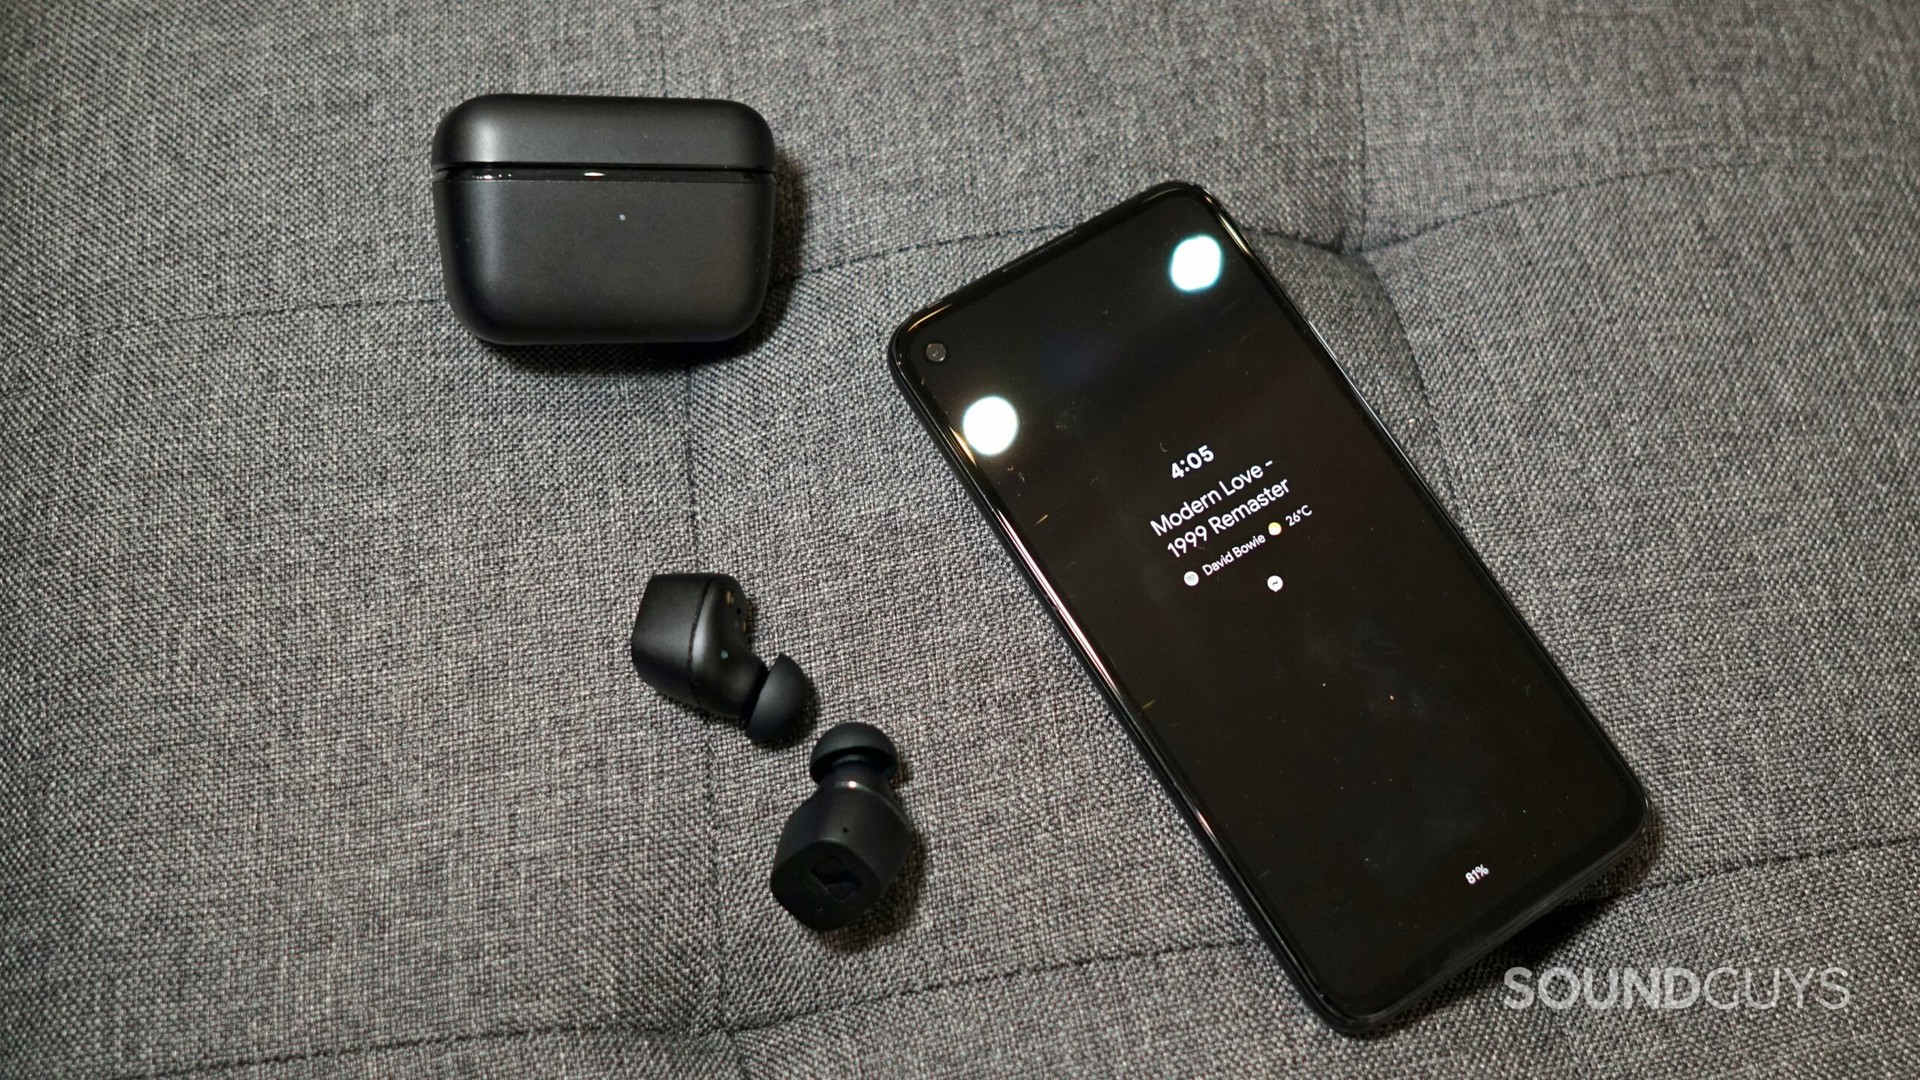 Sennheiser CX True Wireless earphones and case next to a phone.